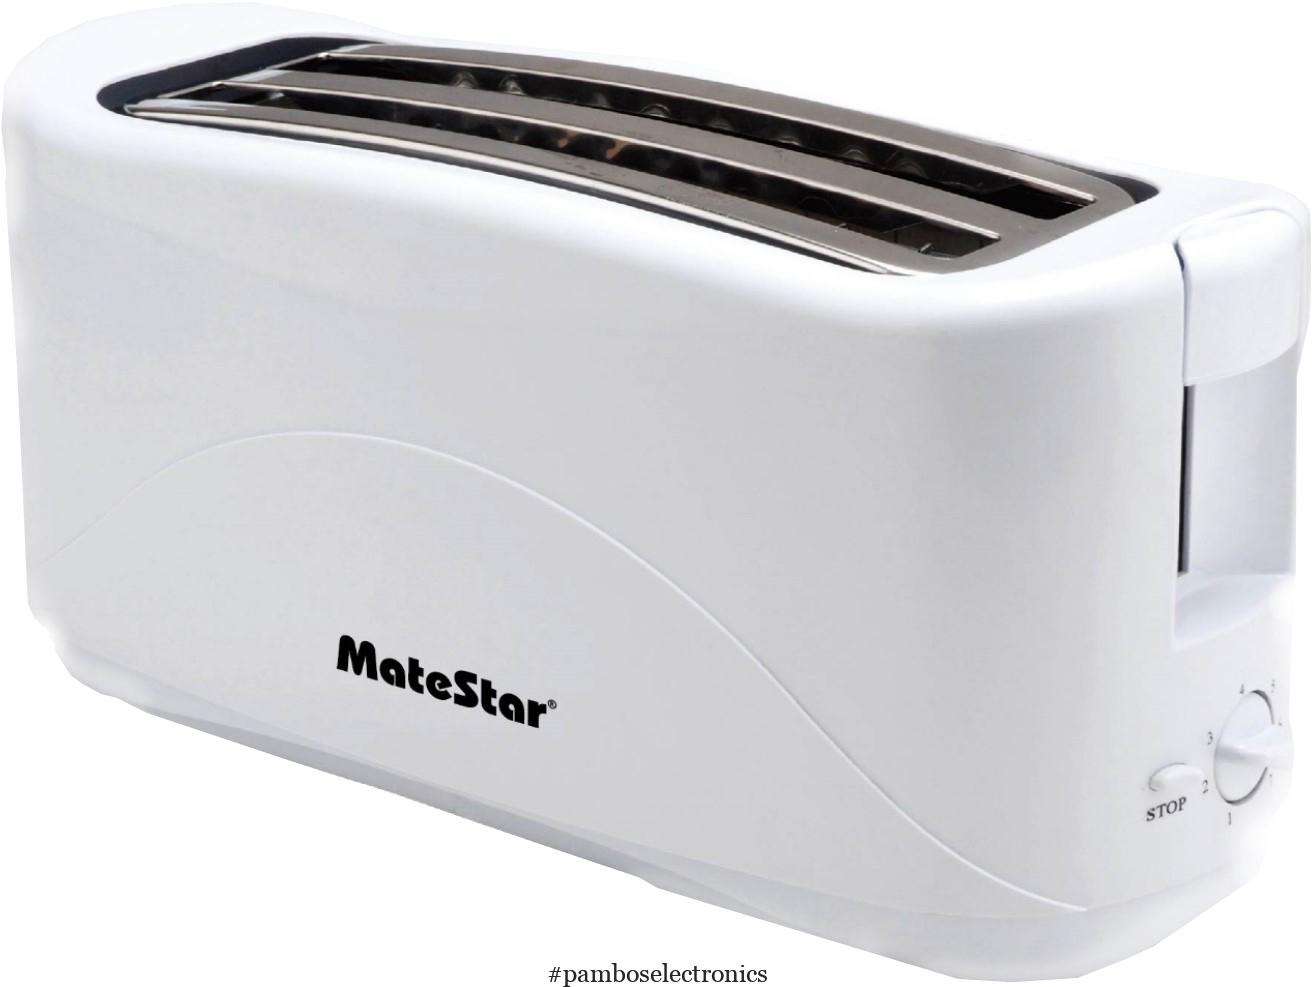 MATESTAR ProfiMate Frappe Mixer MAT-400W PROFESSIONAL - Pambos